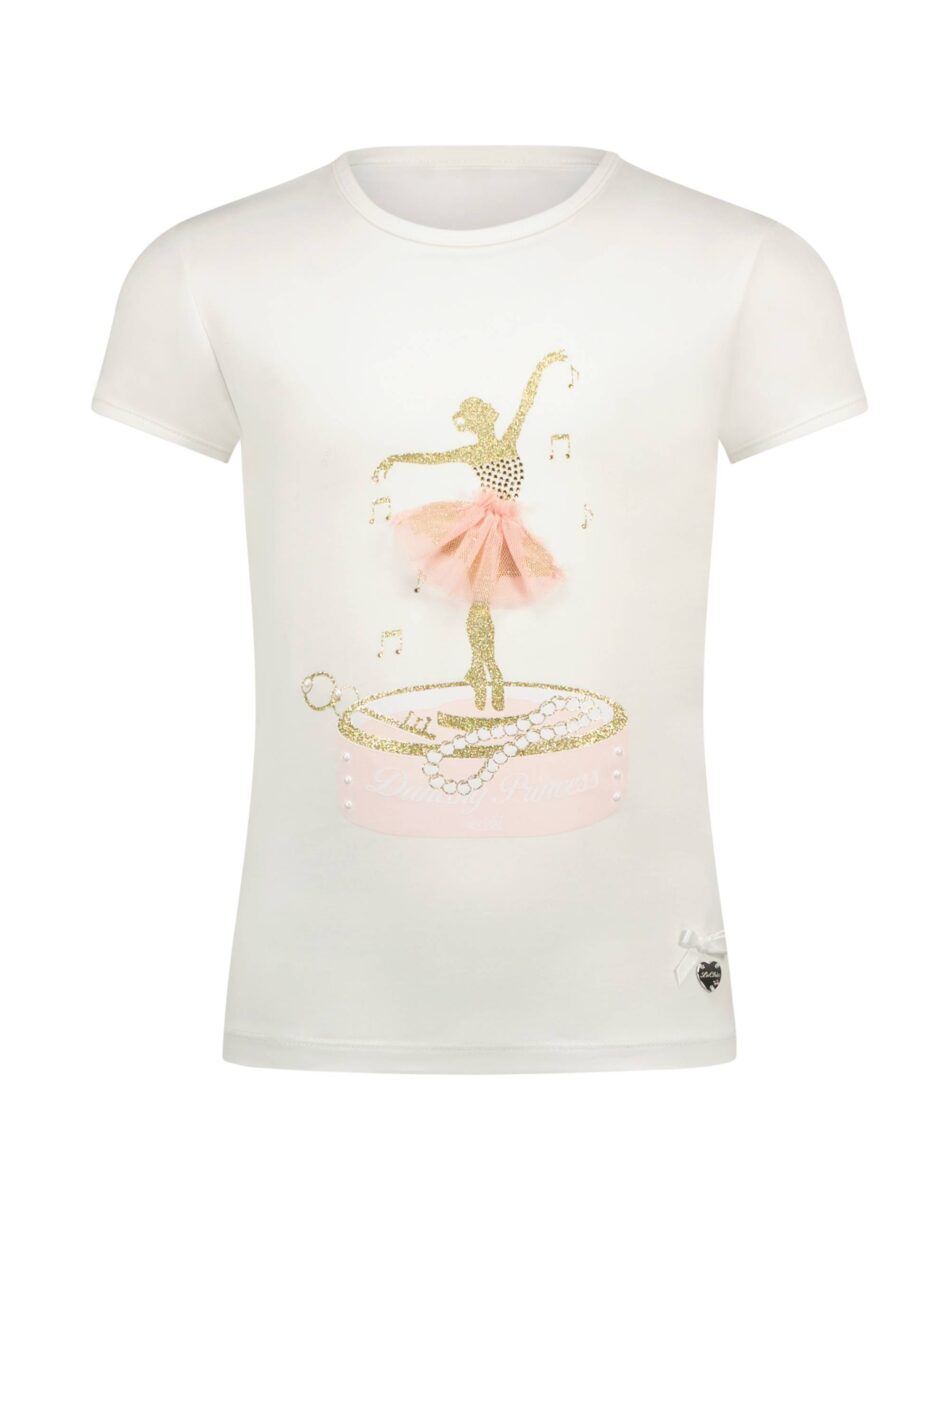 Nommy ballerina t-shirt